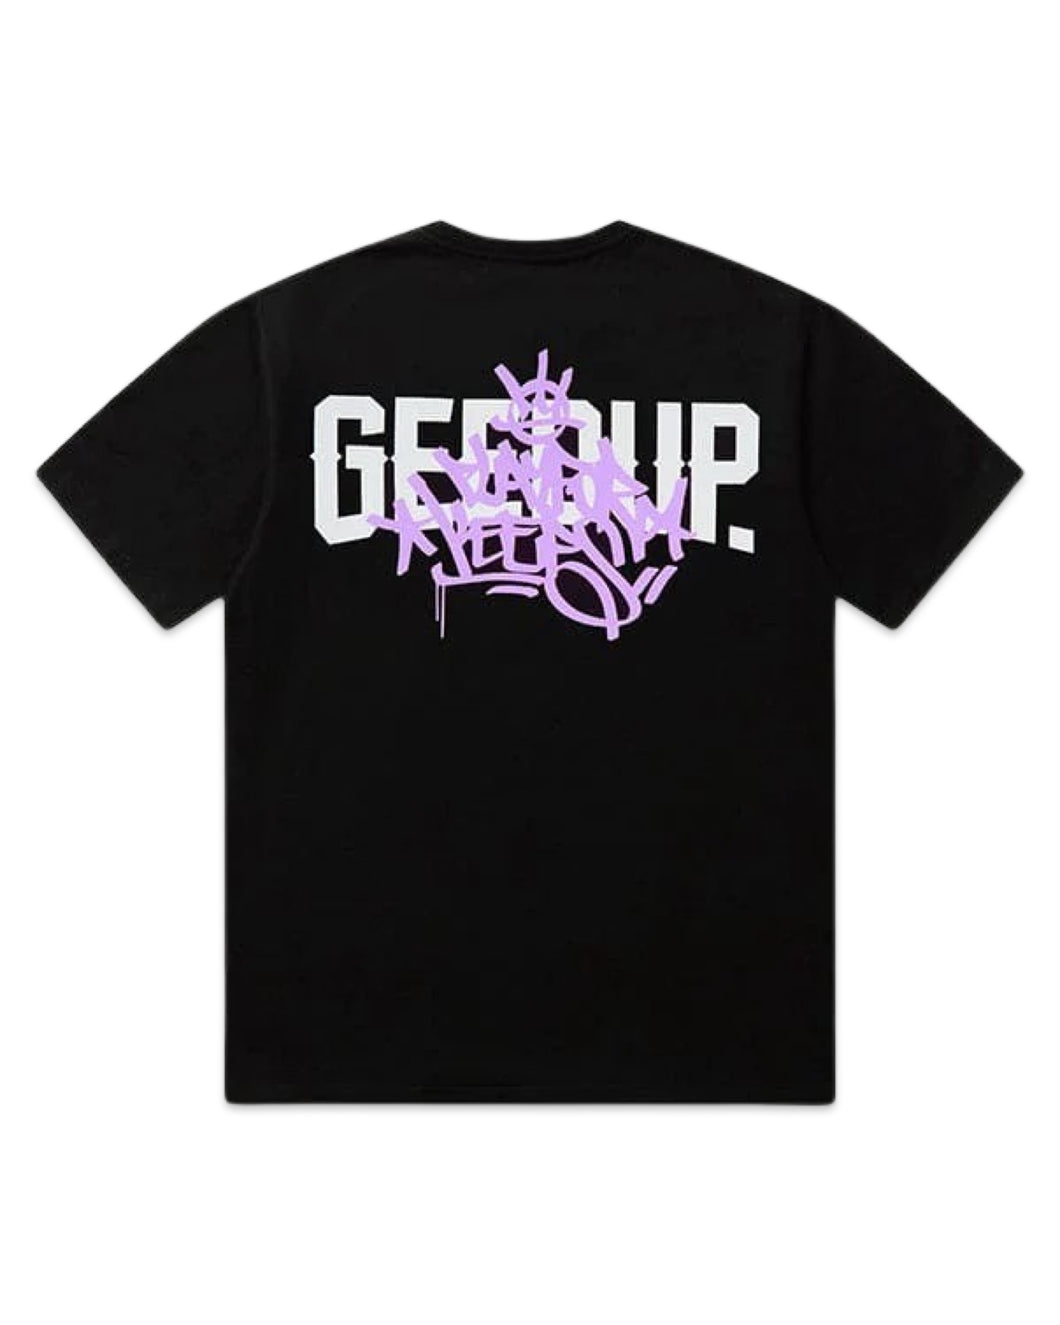 Geedup PFK Play for Keeps Graff Short Sleeve T-Shirt in Black/Lavender